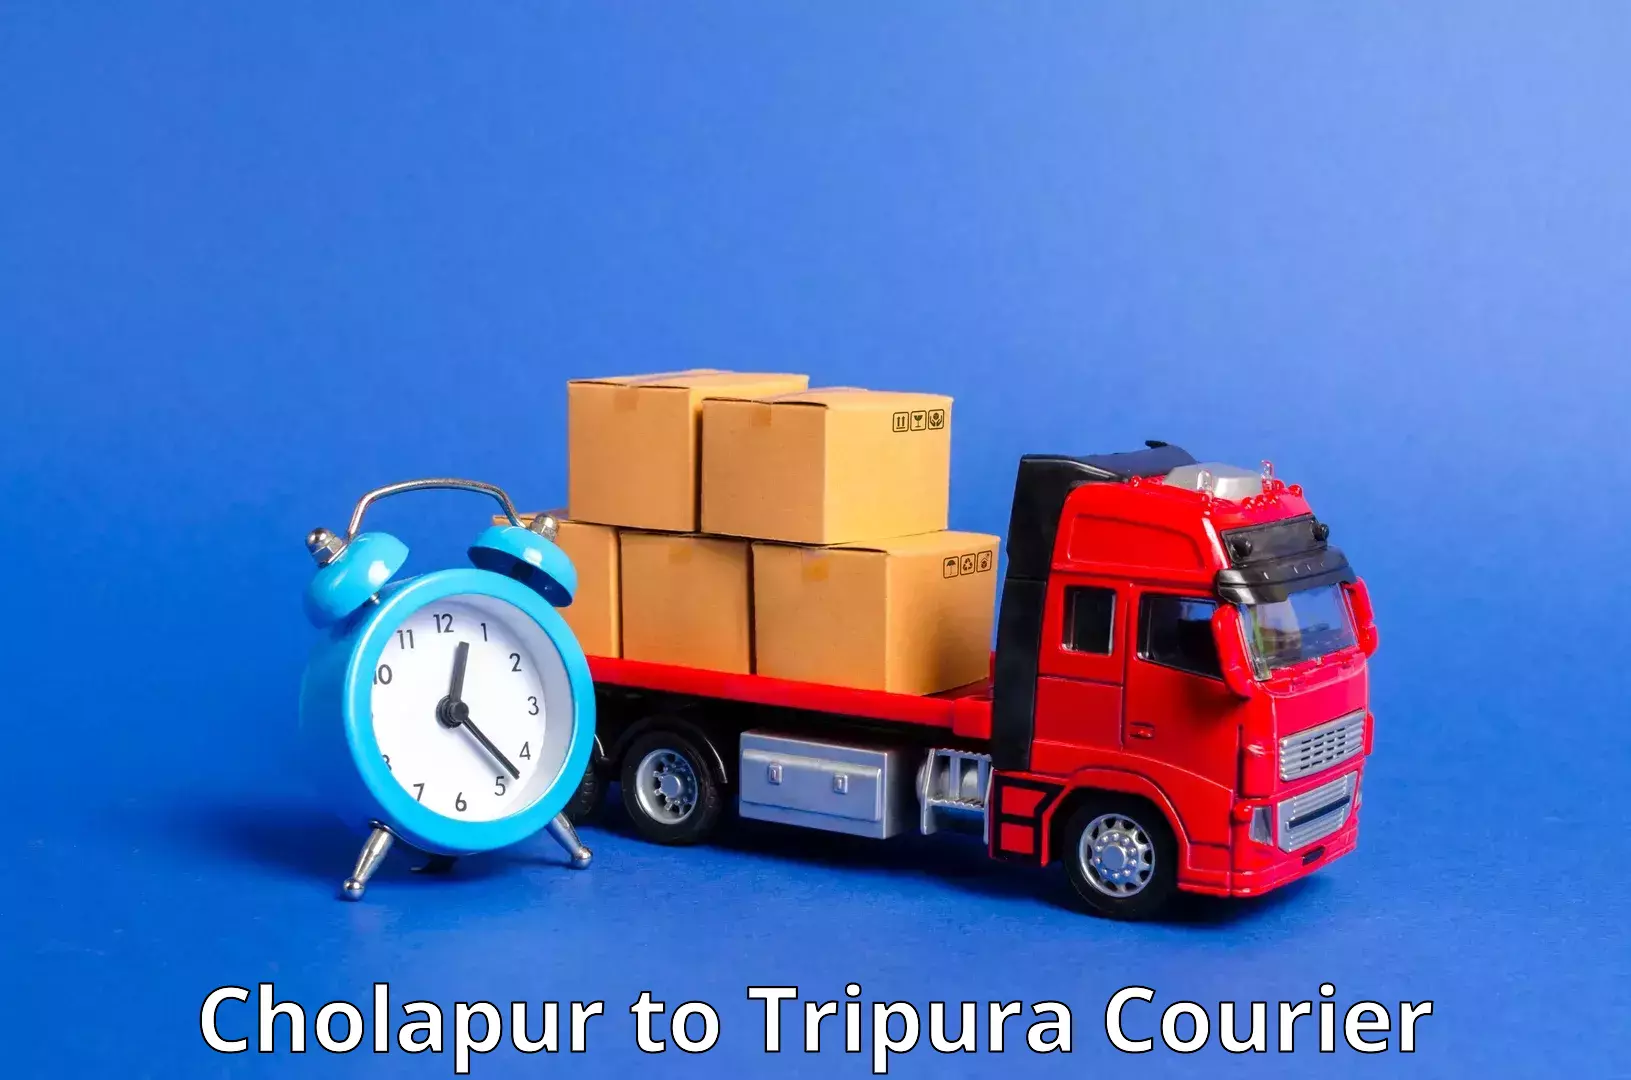 Urgent courier needs Cholapur to Udaipur Tripura